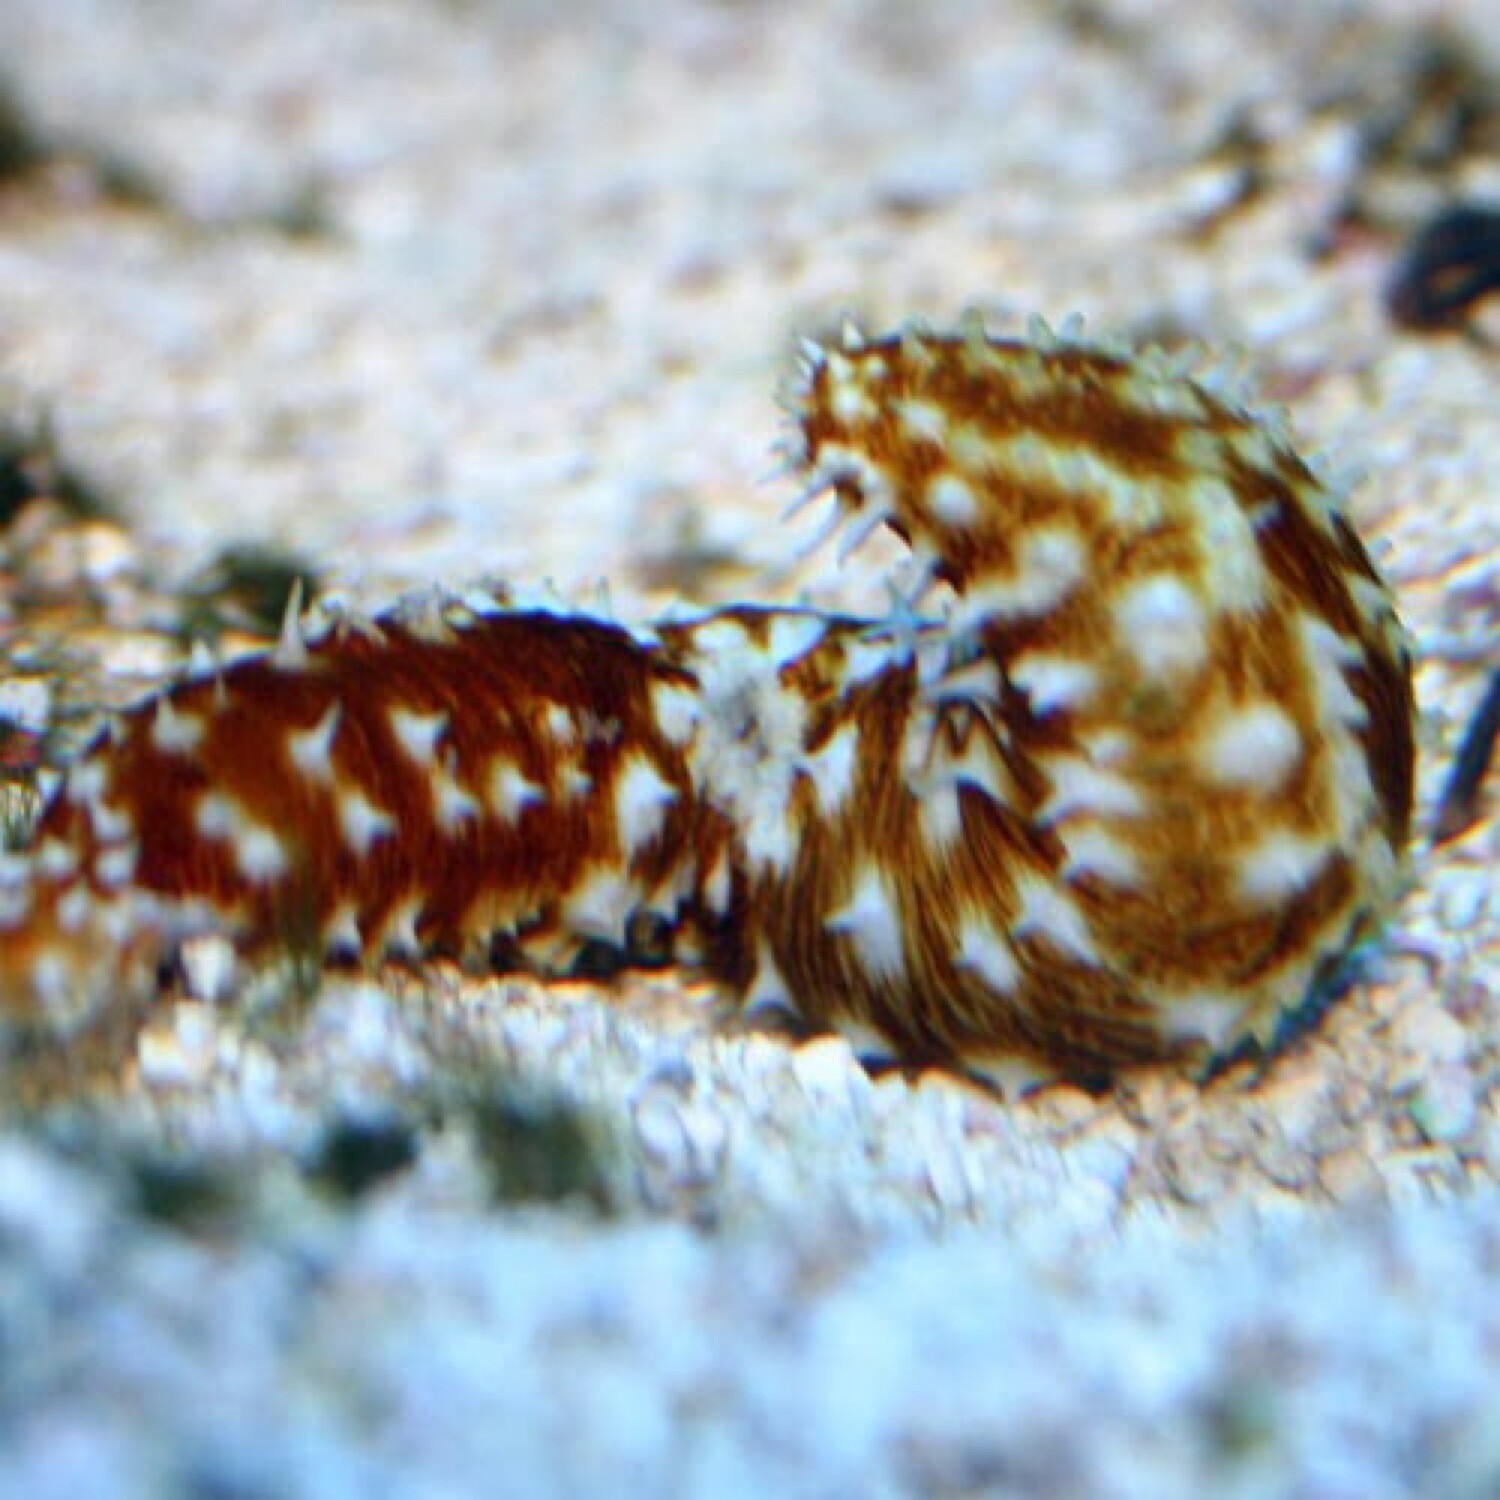 Tiger tail Sea Cucumber